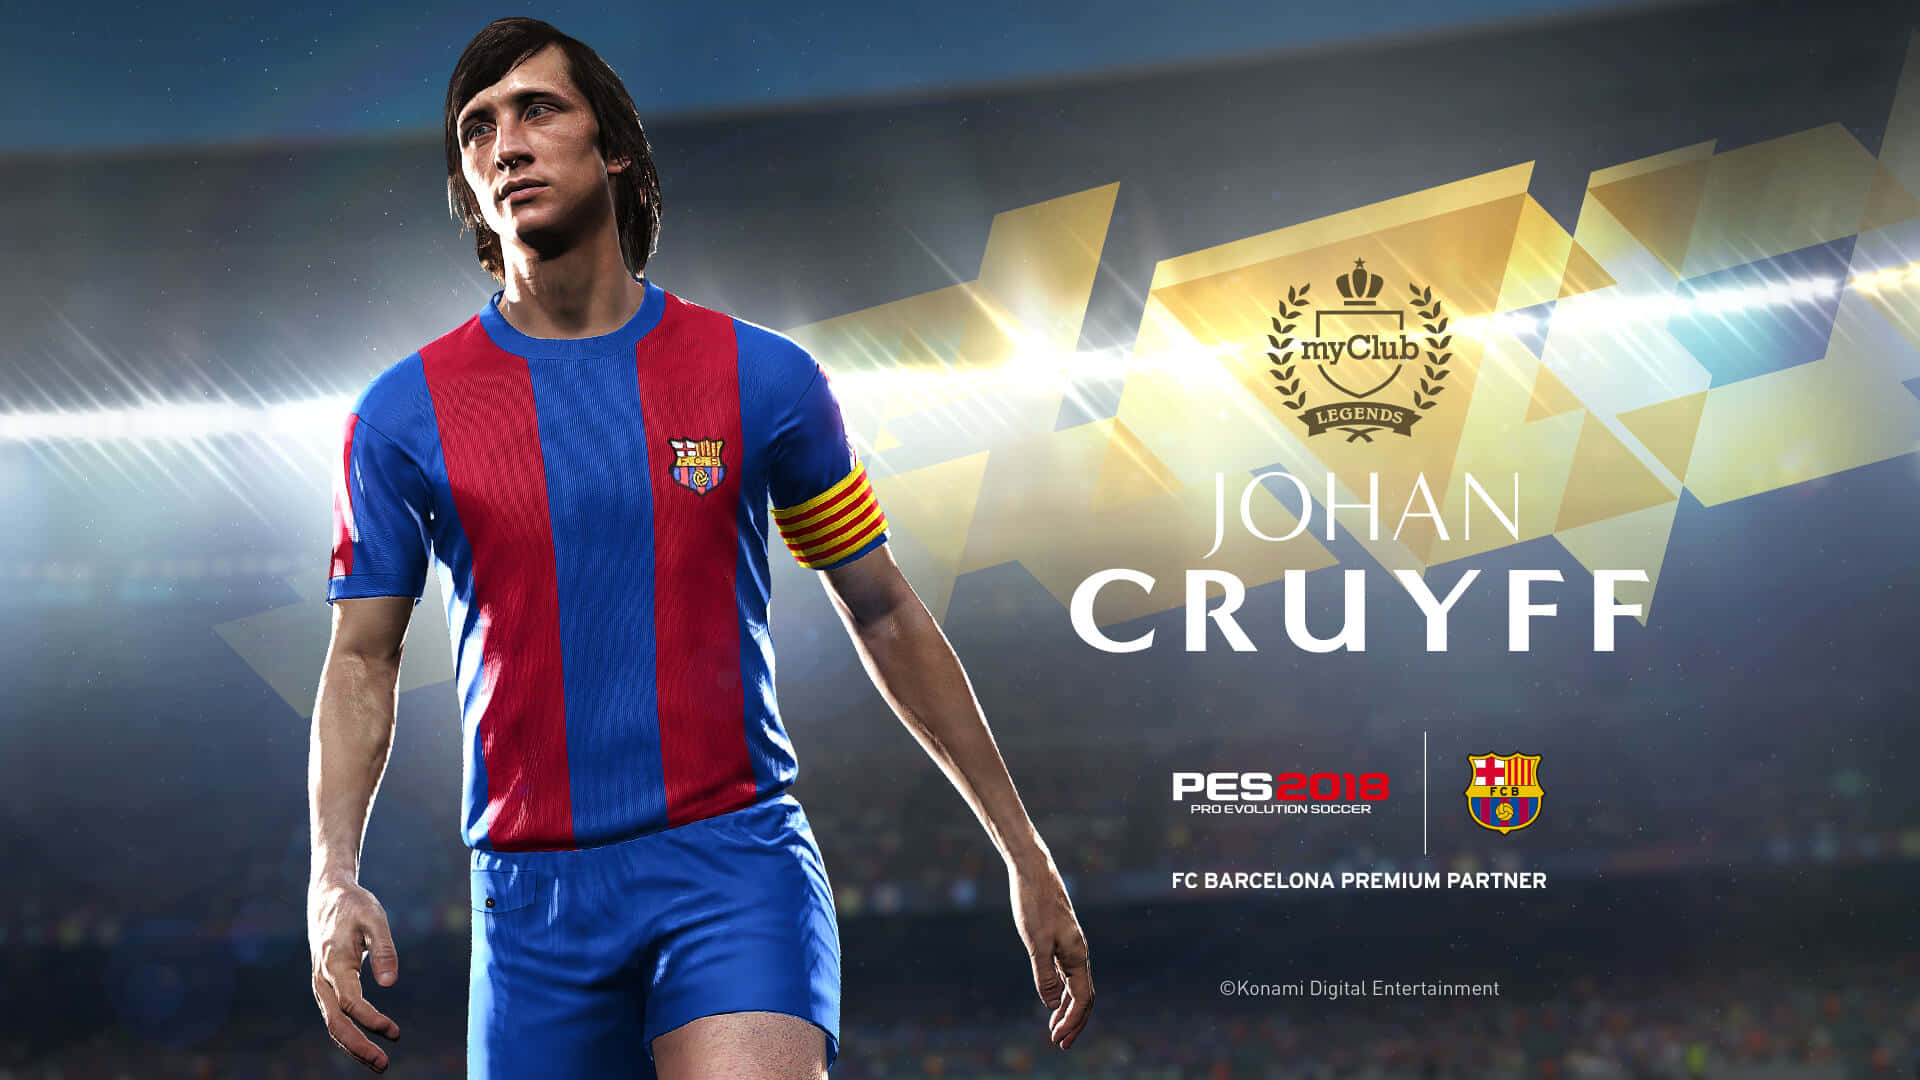 Johancruyff Pro Evolution Soccer 2018 - Johan Cruyff Pro Evolution Soccer 2018 Wallpaper